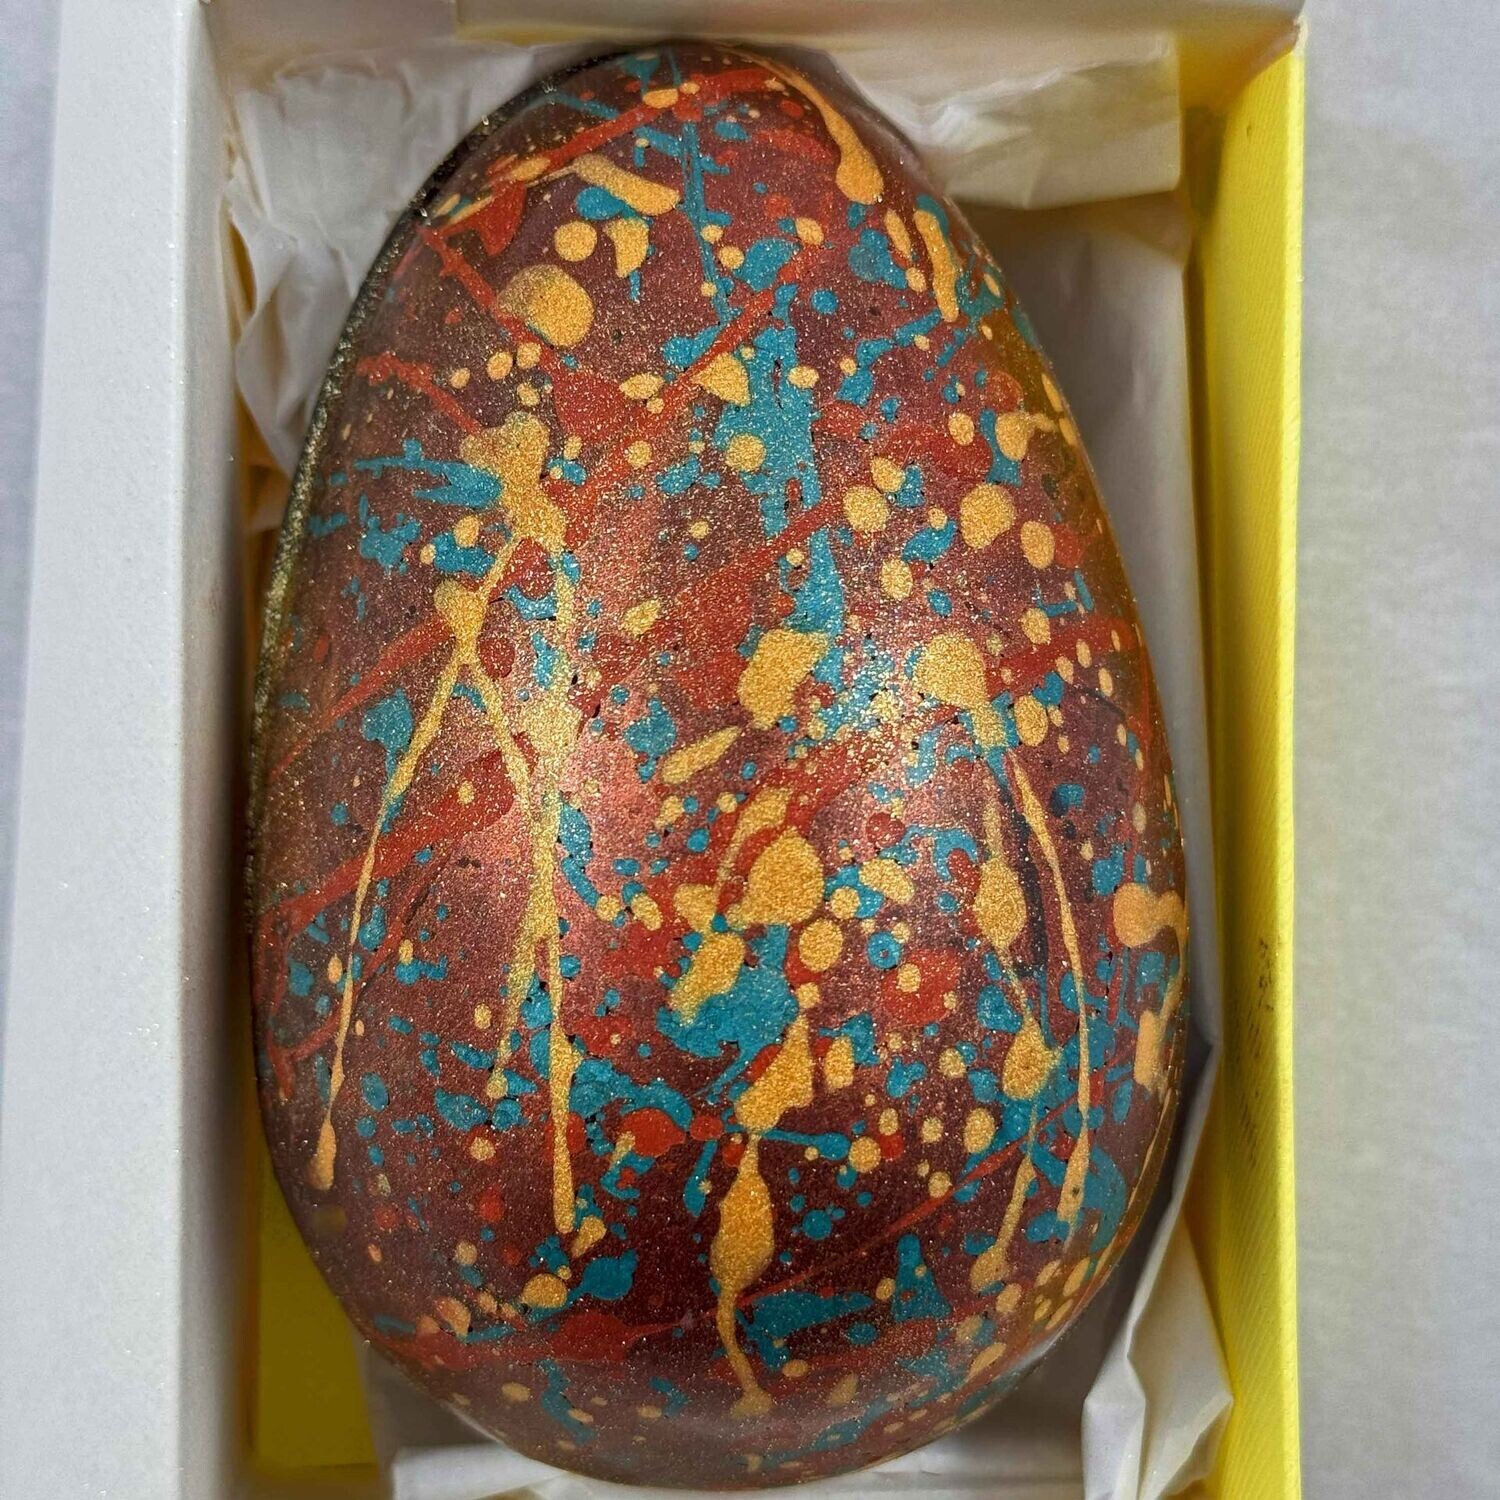 Coloured Easter Egg: 60% dark or 40% milk chocolate